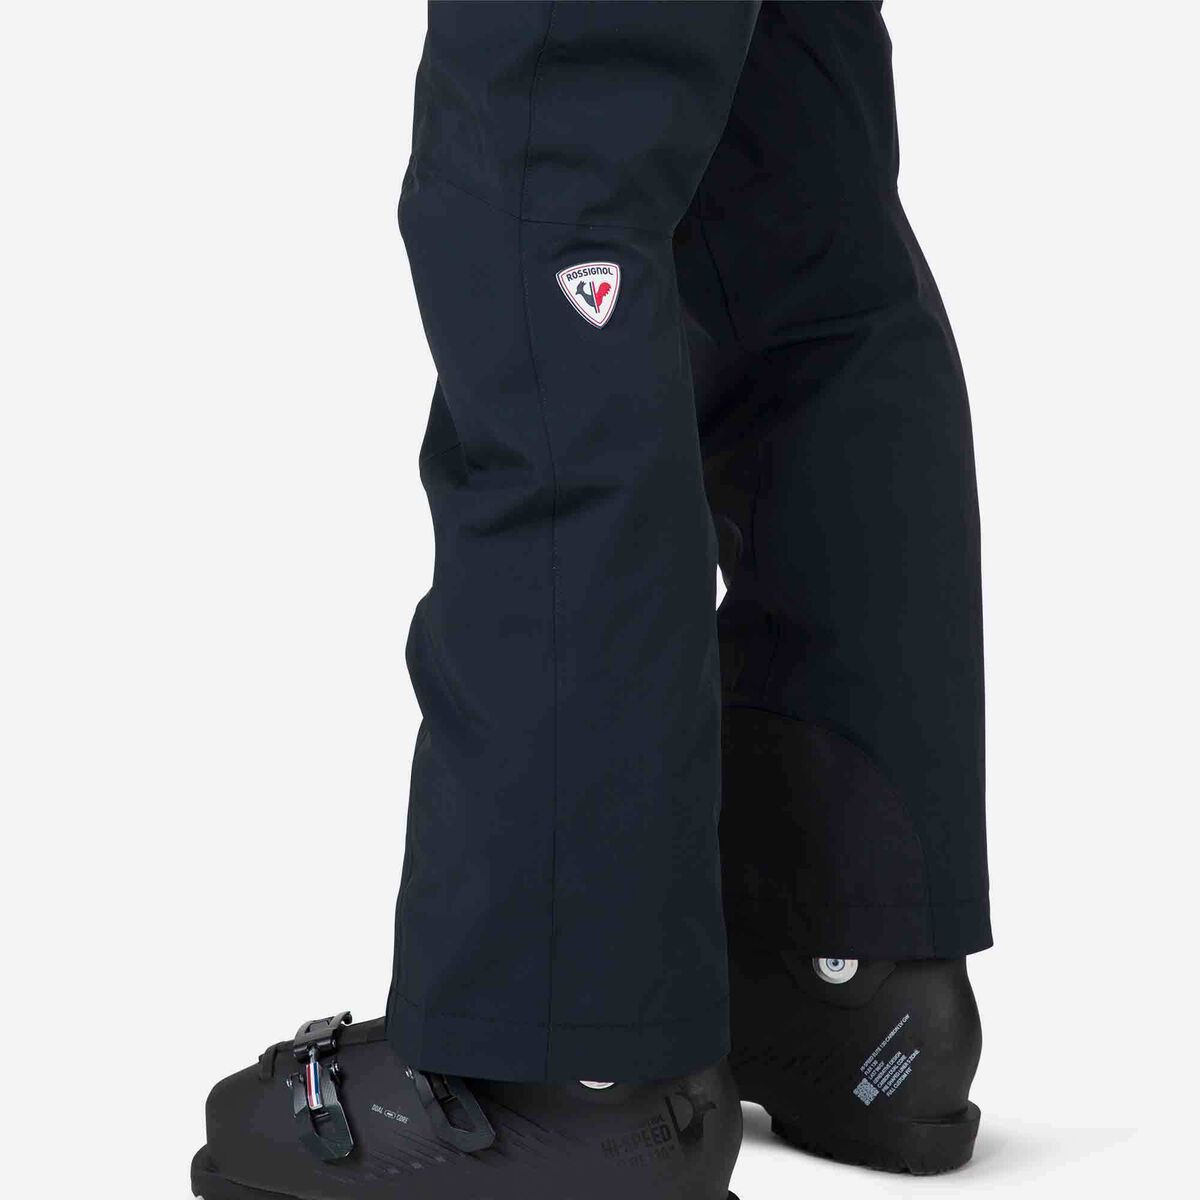 Rossignol Men's React Ski Pants black